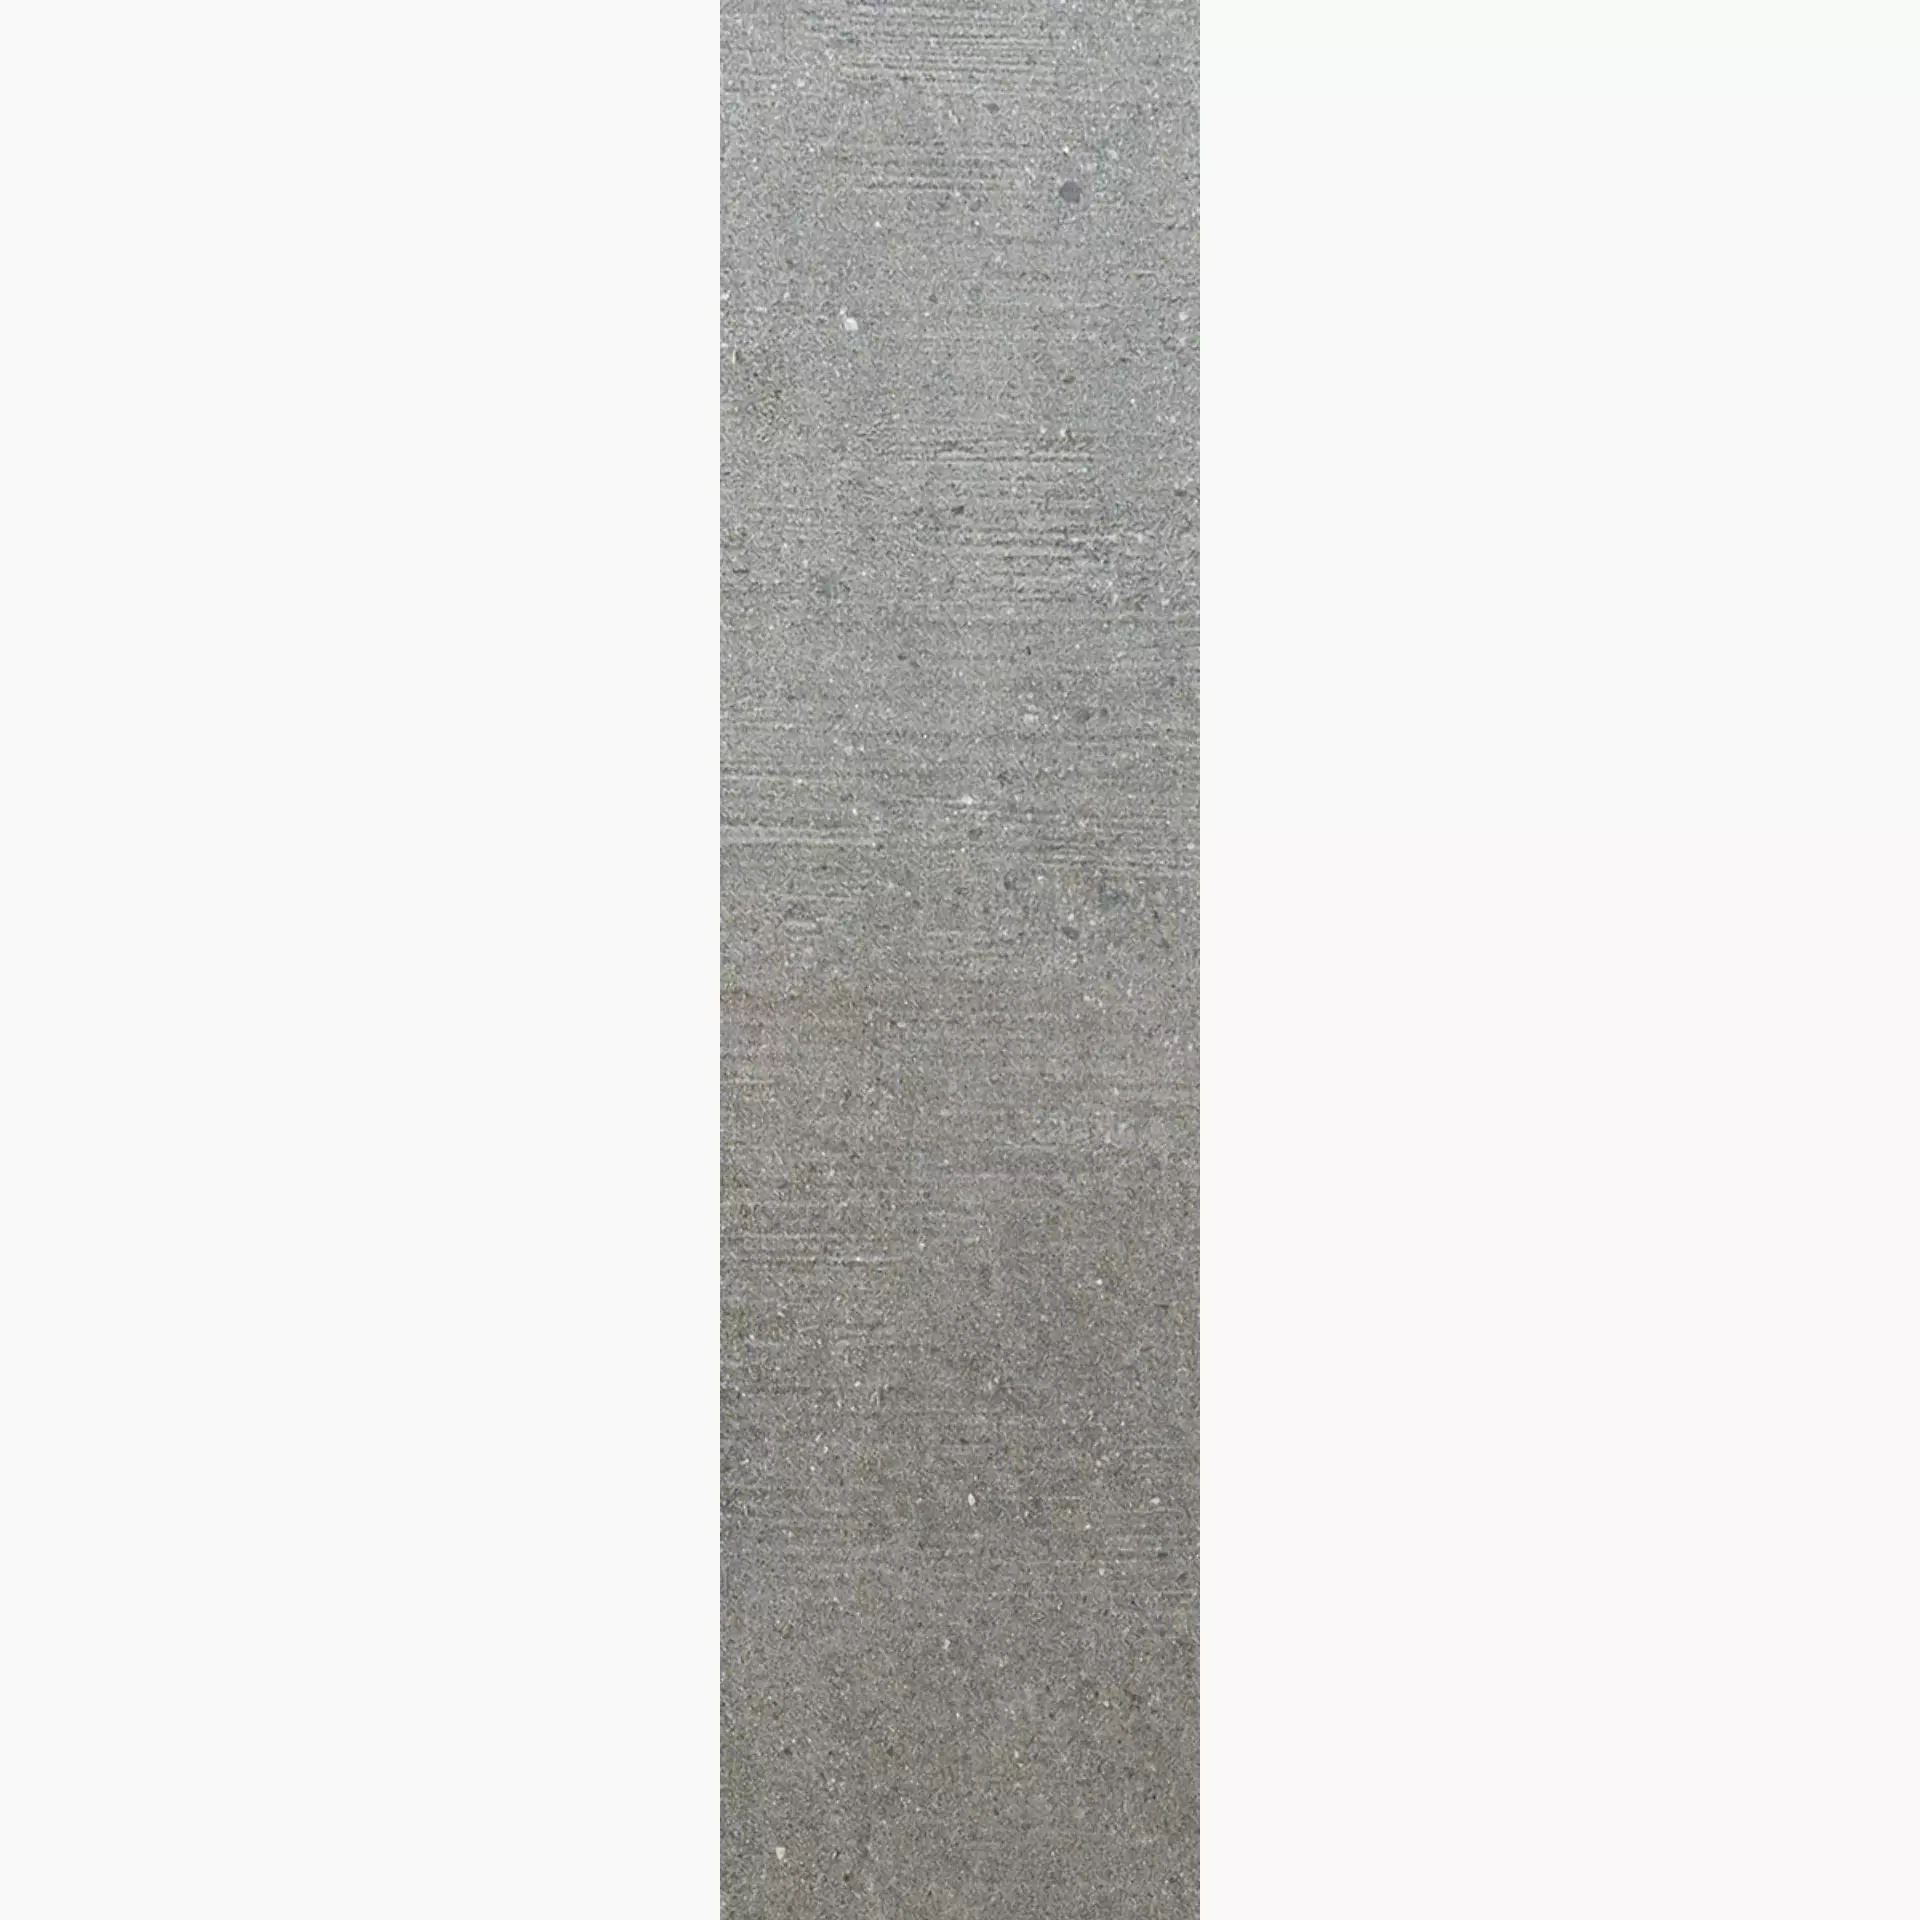 Rondine Loft Grey Strutturato J89097 20x80cm rectified 8,5mm